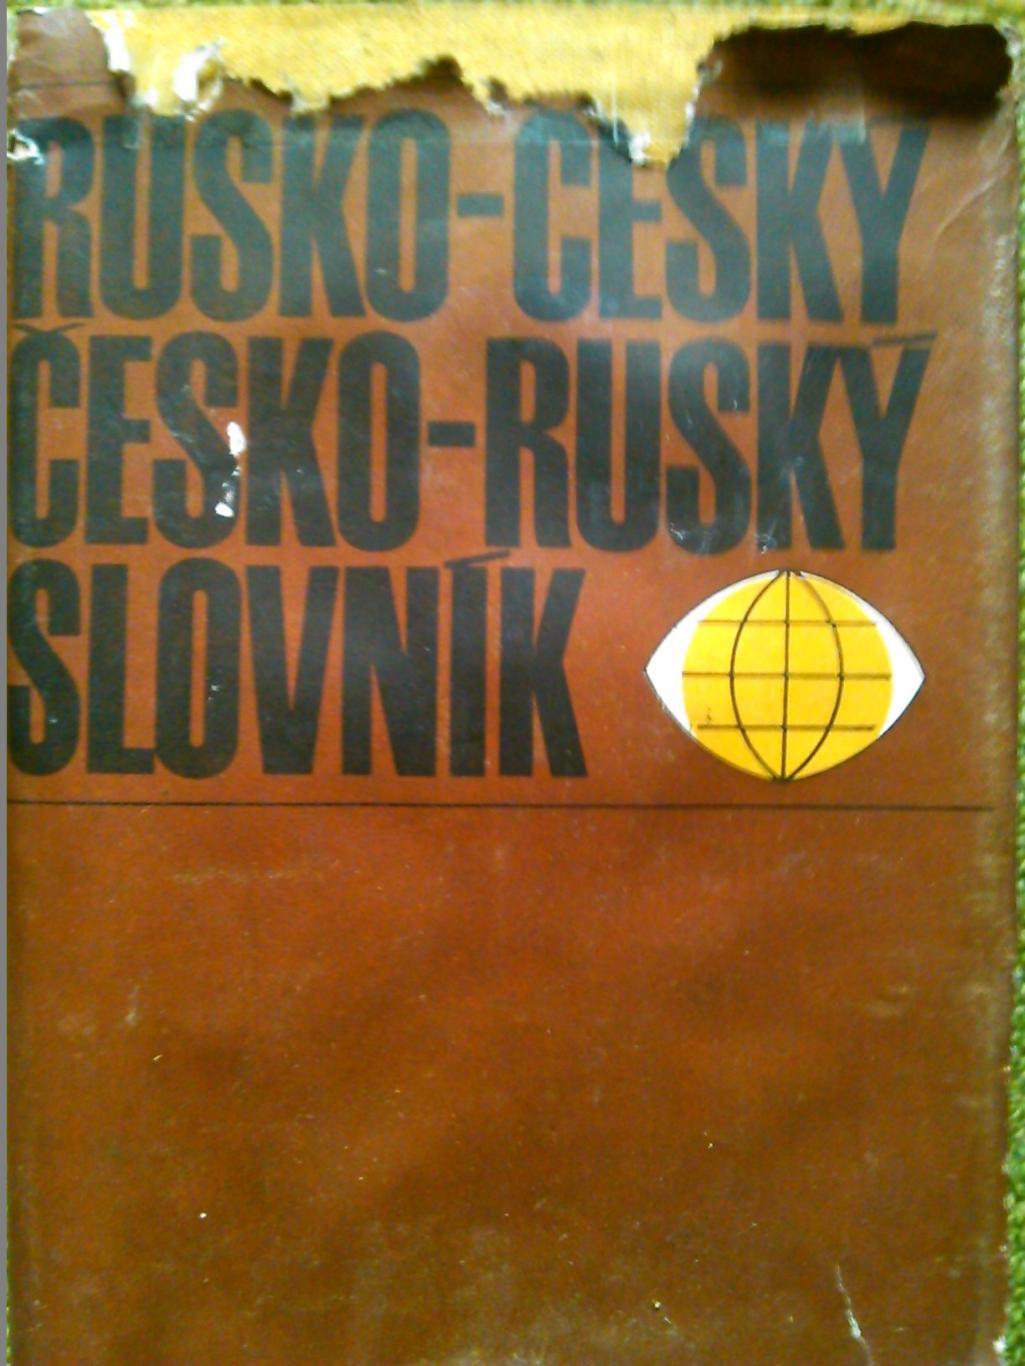 RUSKO-CESKY CESKO-RUSKY SLOVNIK/РУСКО-ЧЕШСКИЙ ЧЕШКО-РУССКИЙ СЛОВАРЬ. 1